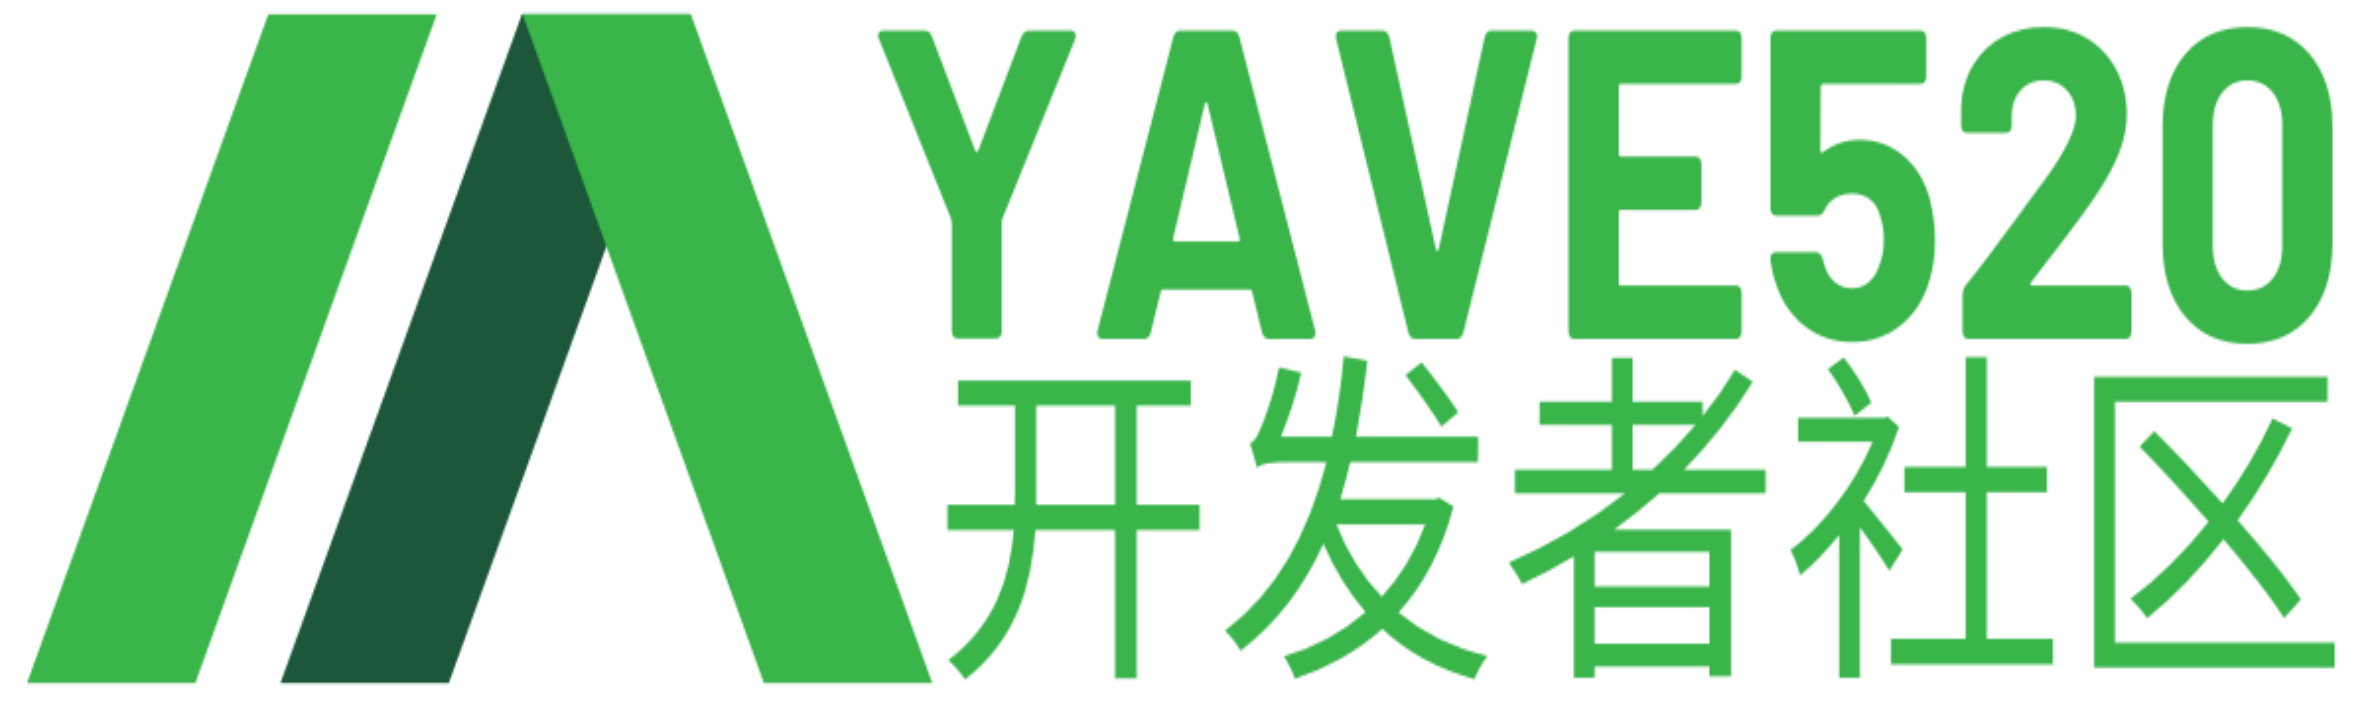 aa888-Yave520-专业开发者社区